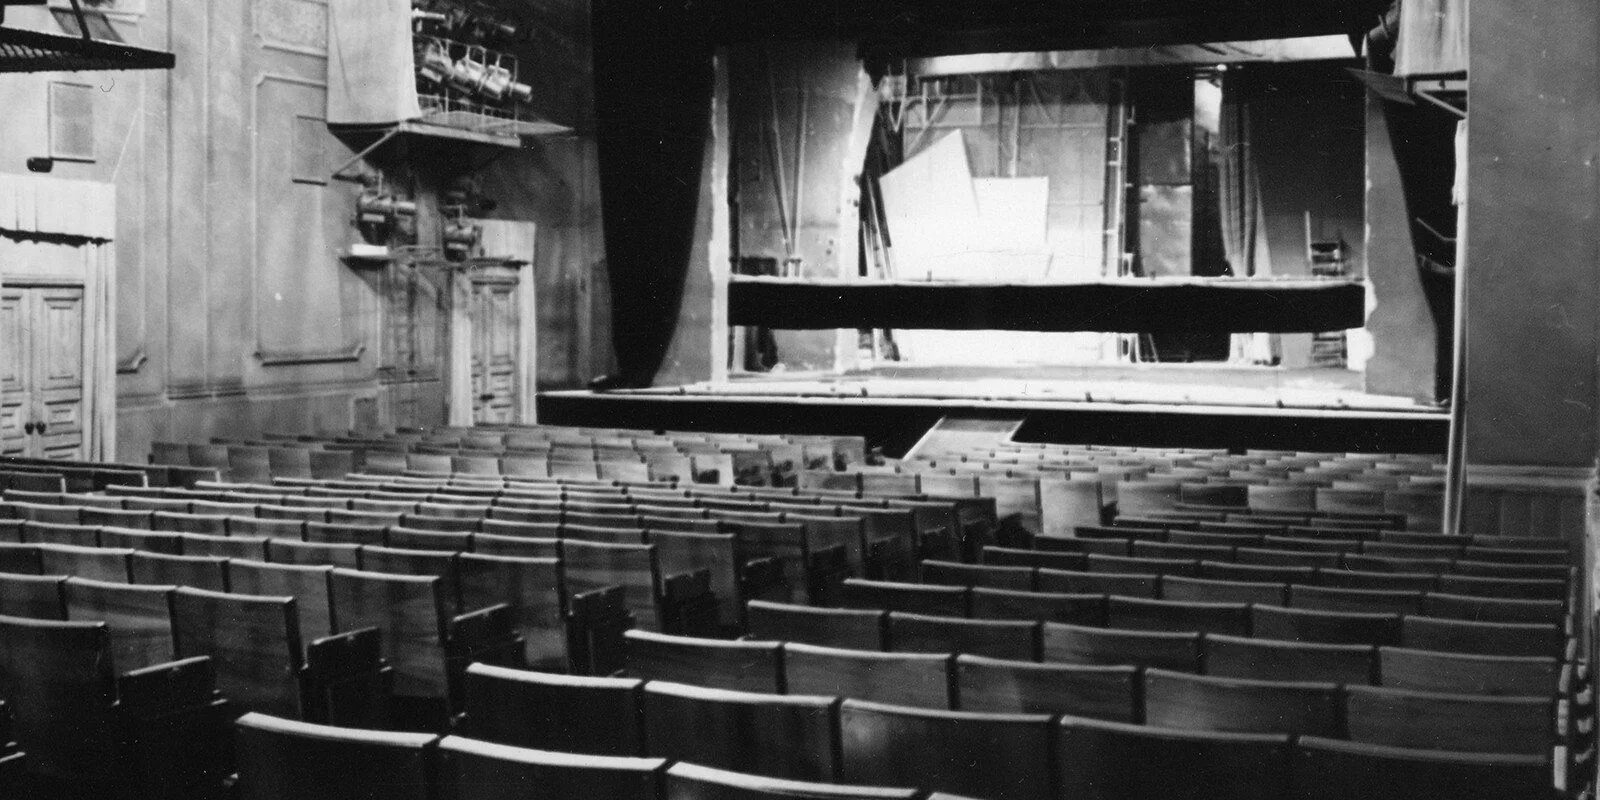 Мхт апрель. Театр Современник 1956. Театр Современник 1960. Театр Современник 1970. Московский театр Современник в 1960.